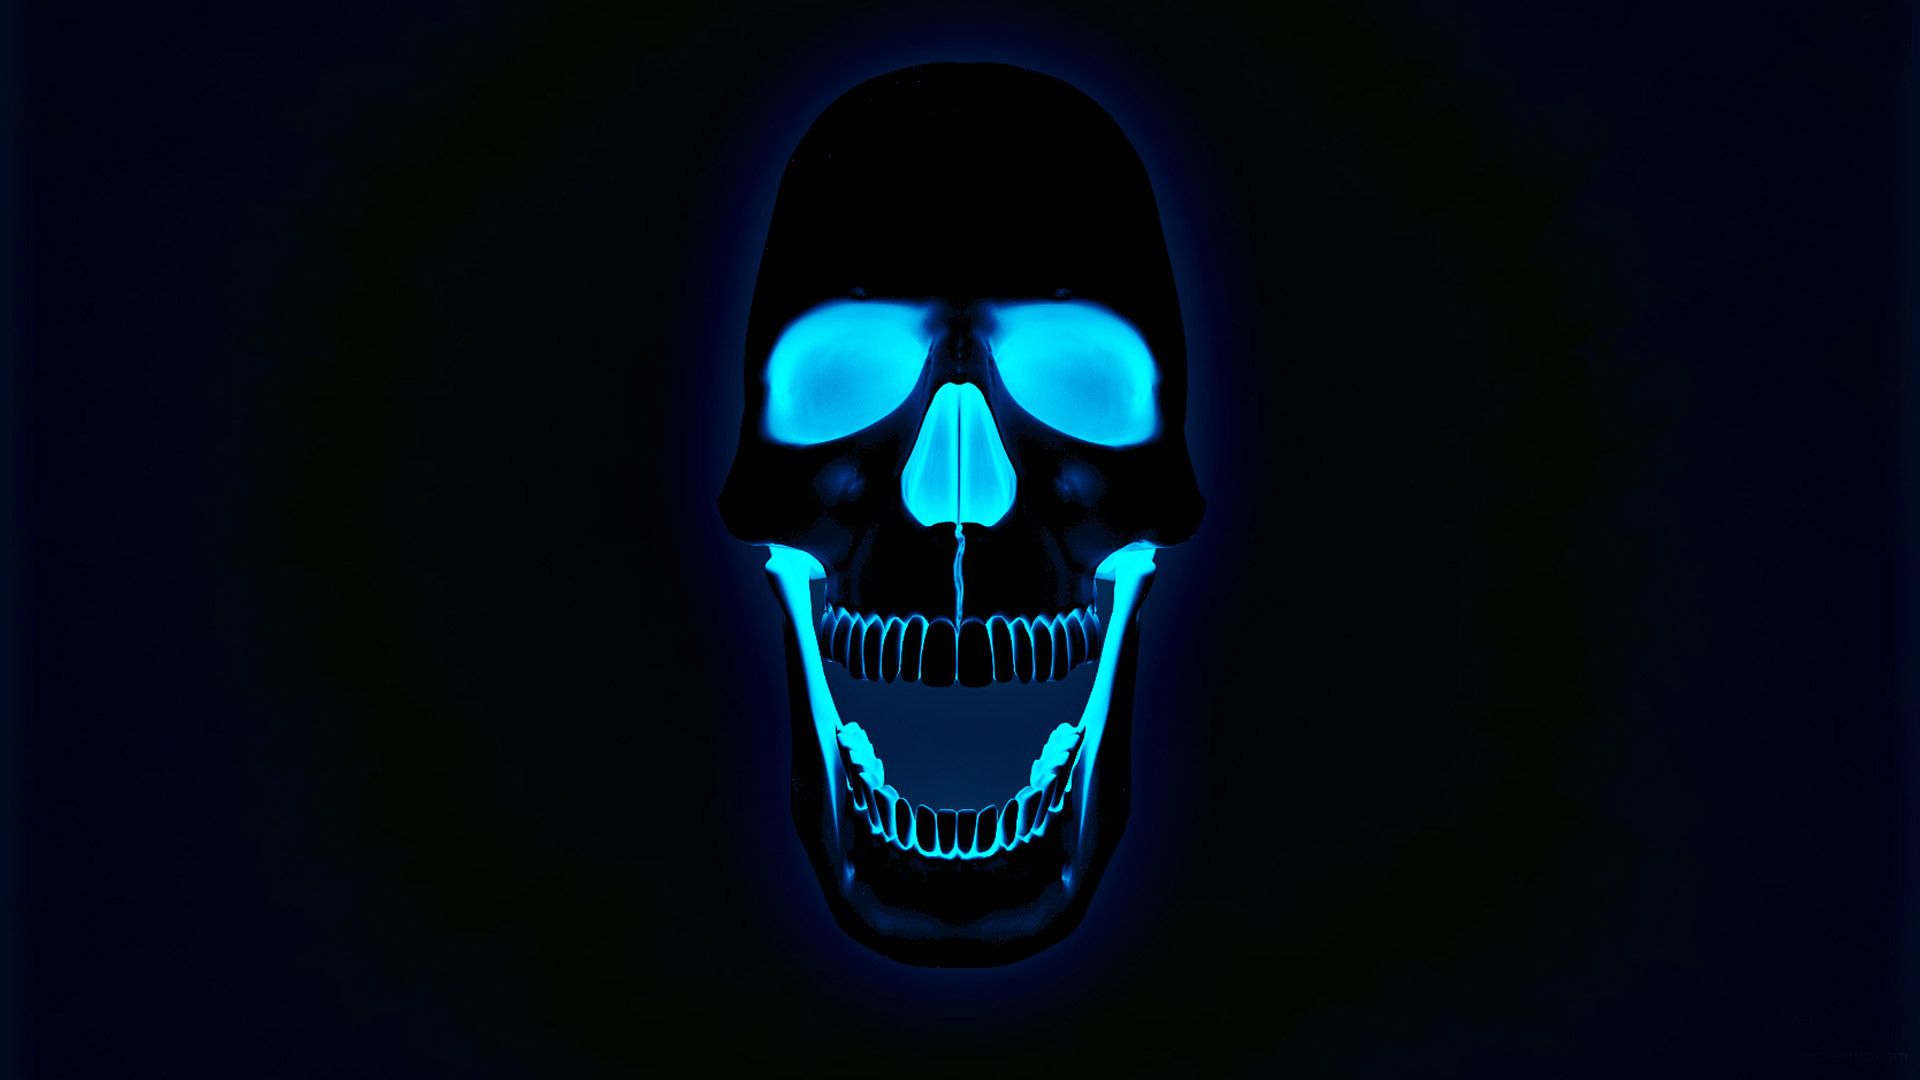  Neon 3D Hintergrundbild 1920x1080. Glowing neon skull wallpaper